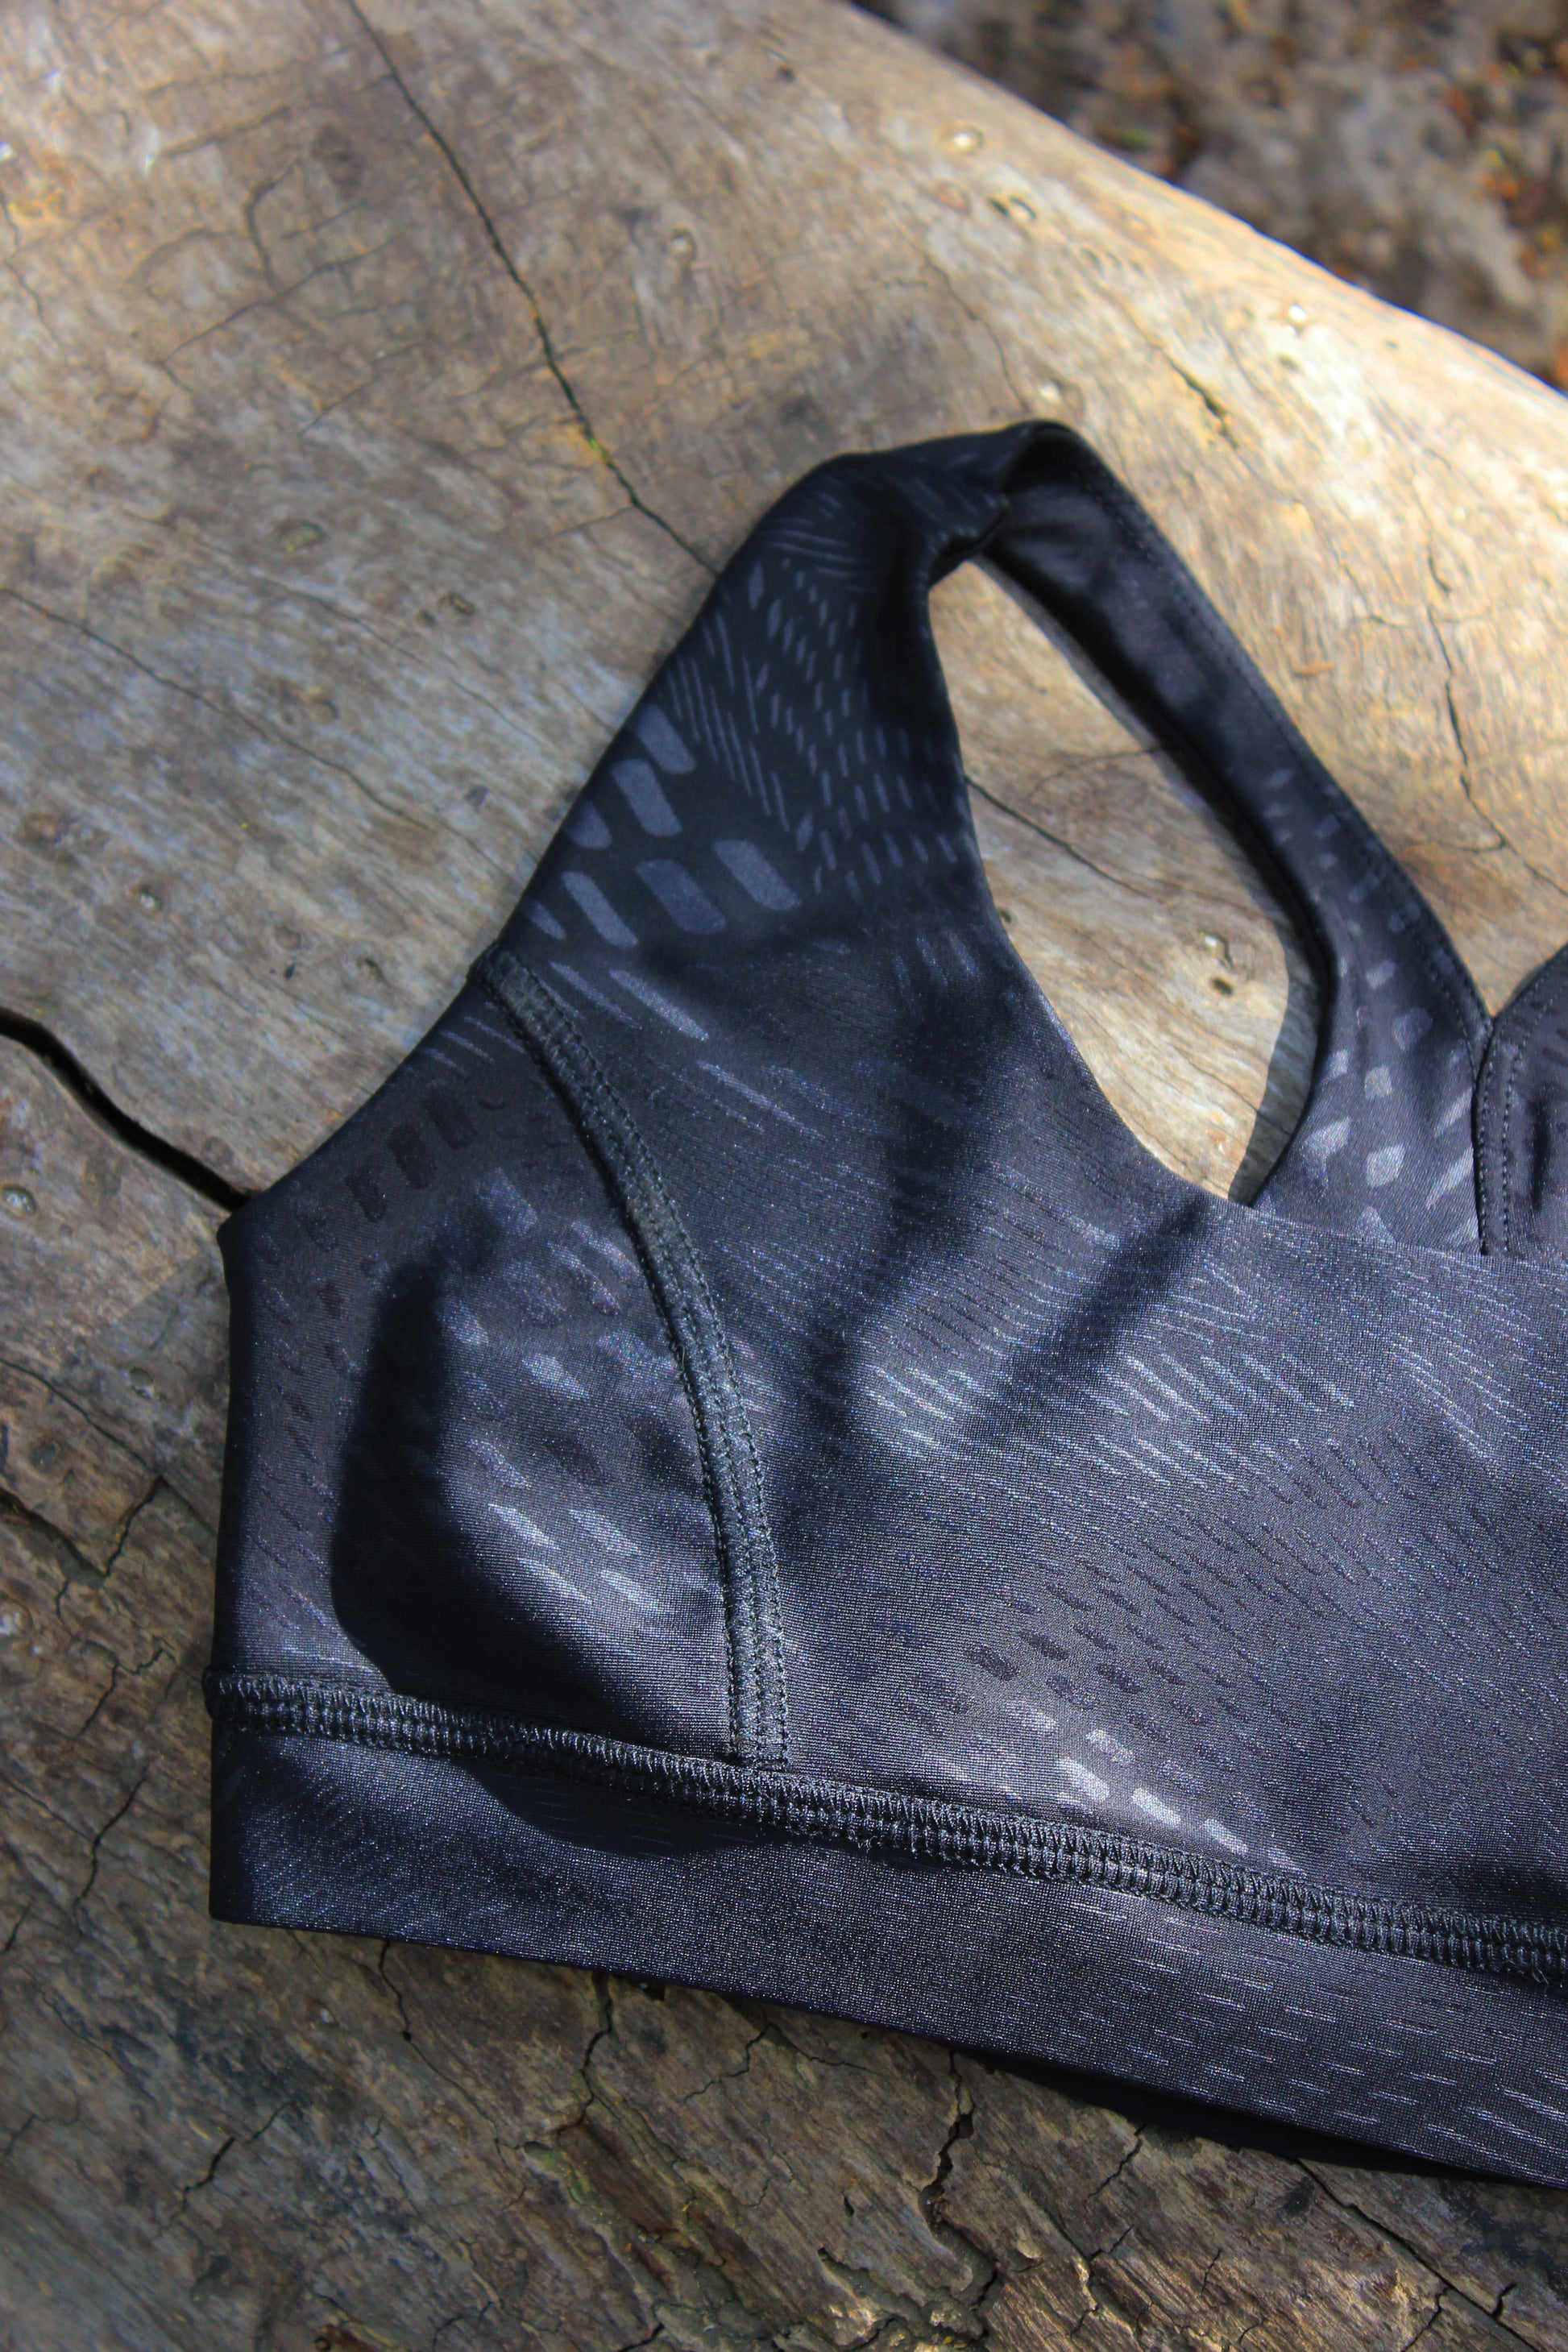 âme âme Activewear: X-Racerback Sports Bra Negro Estampado/Black Print Front View Close Up